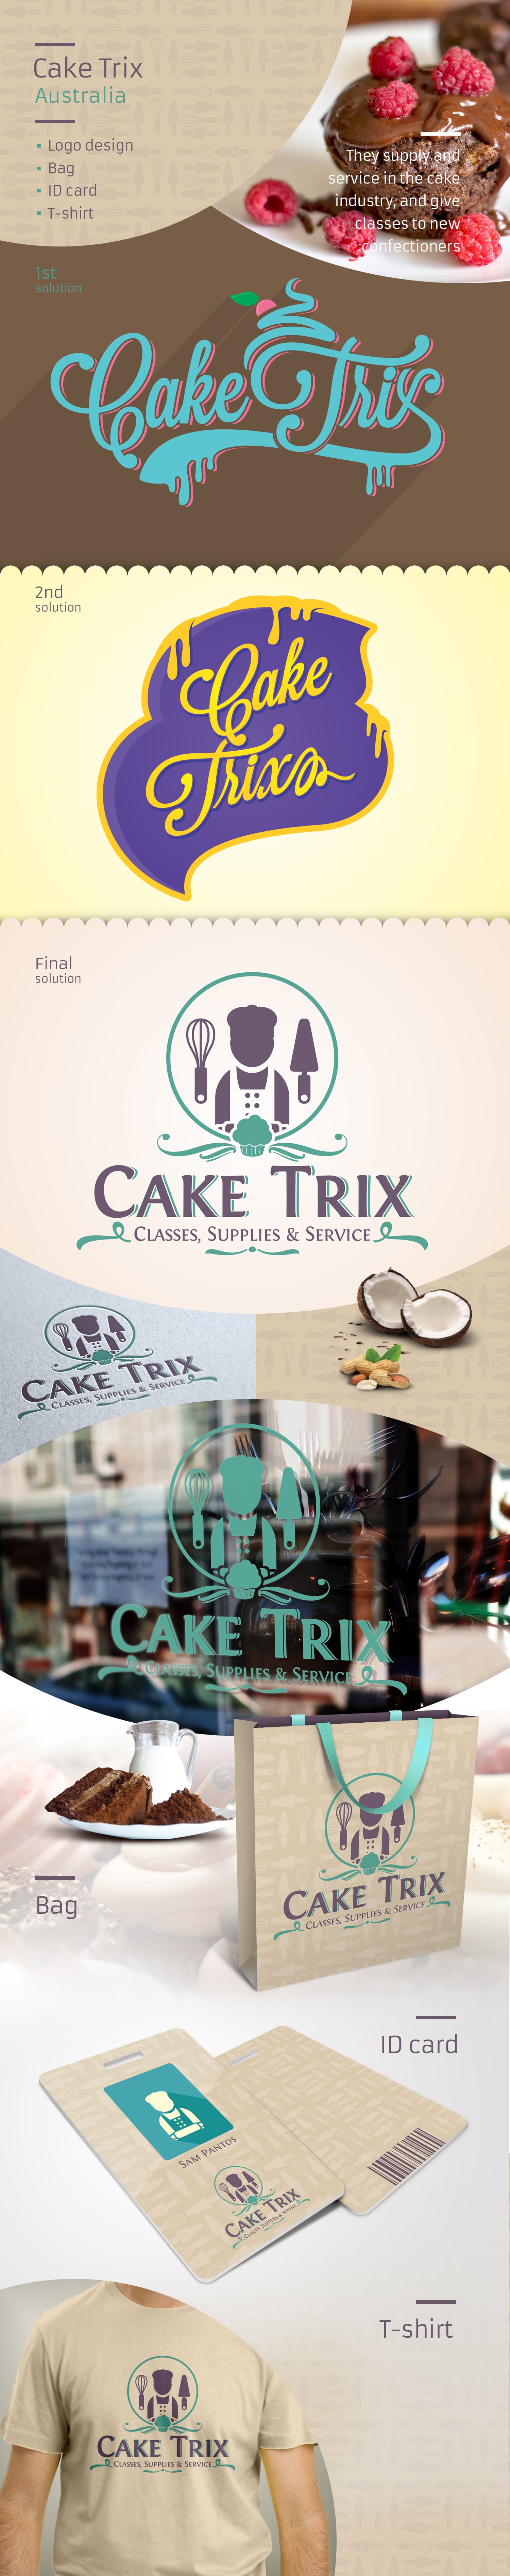 Cake Trix Australia corporate identity